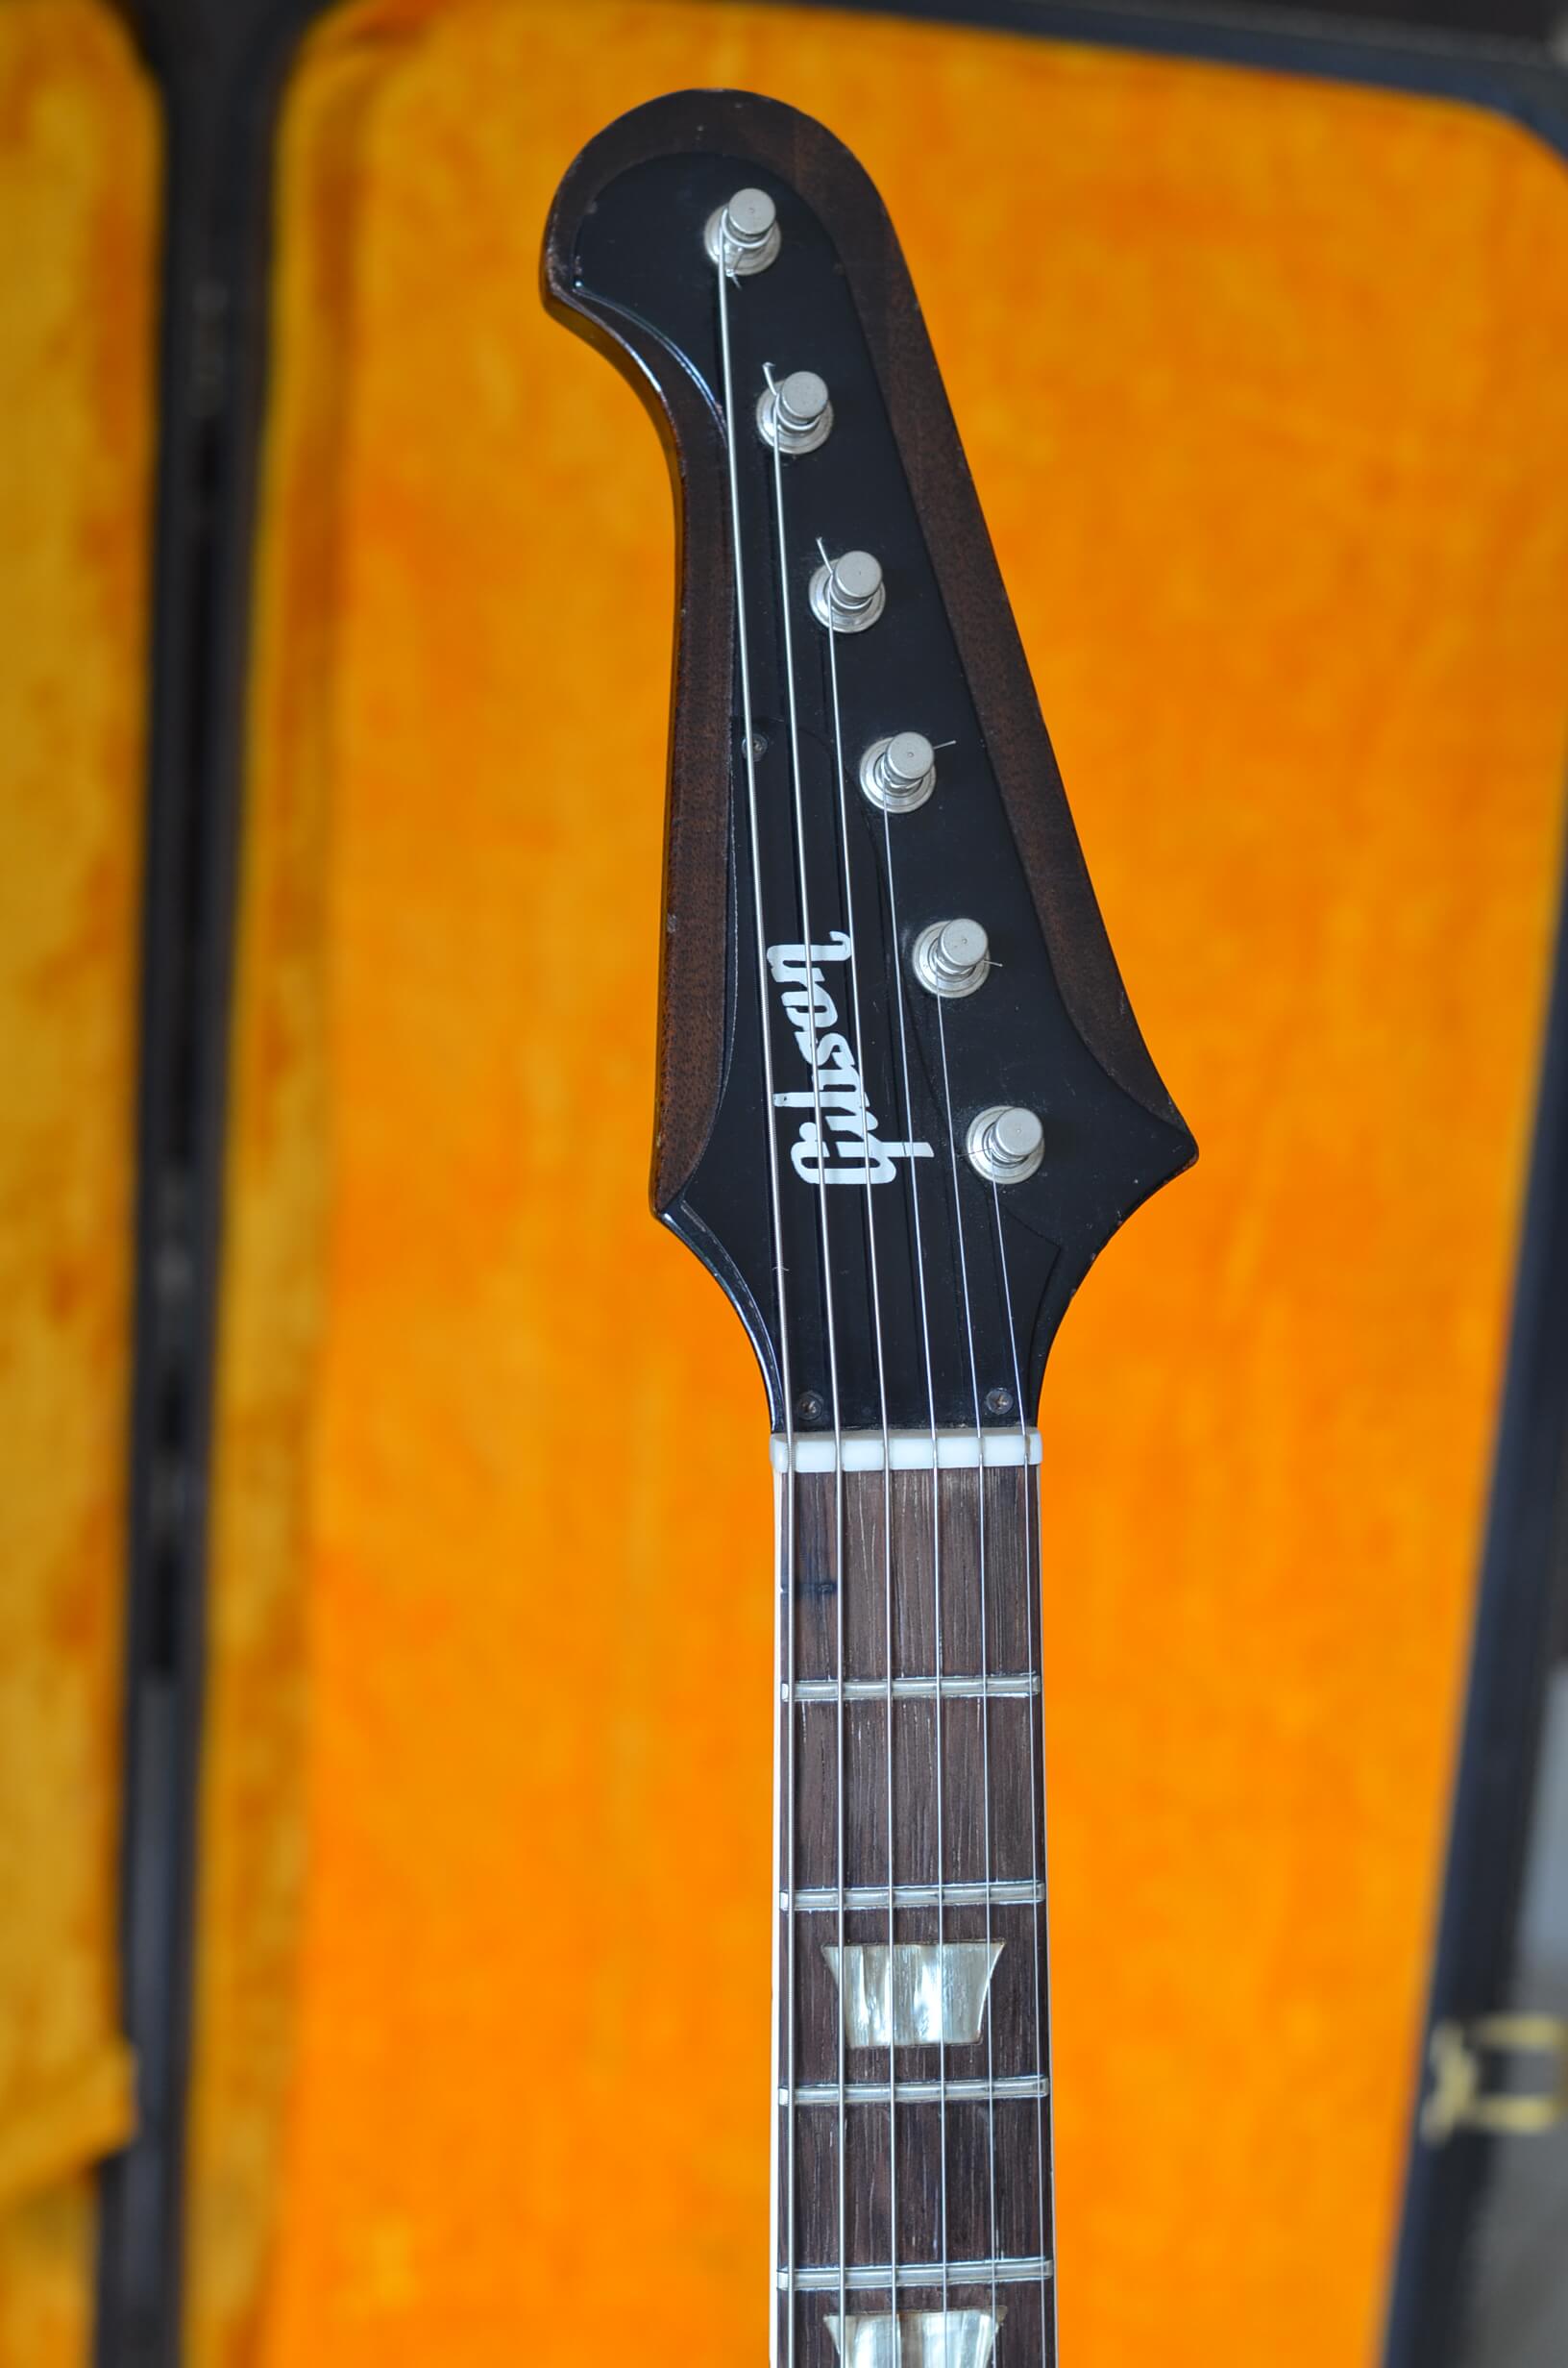 Gibson Firebird Reverse headstock shape with long bass strings